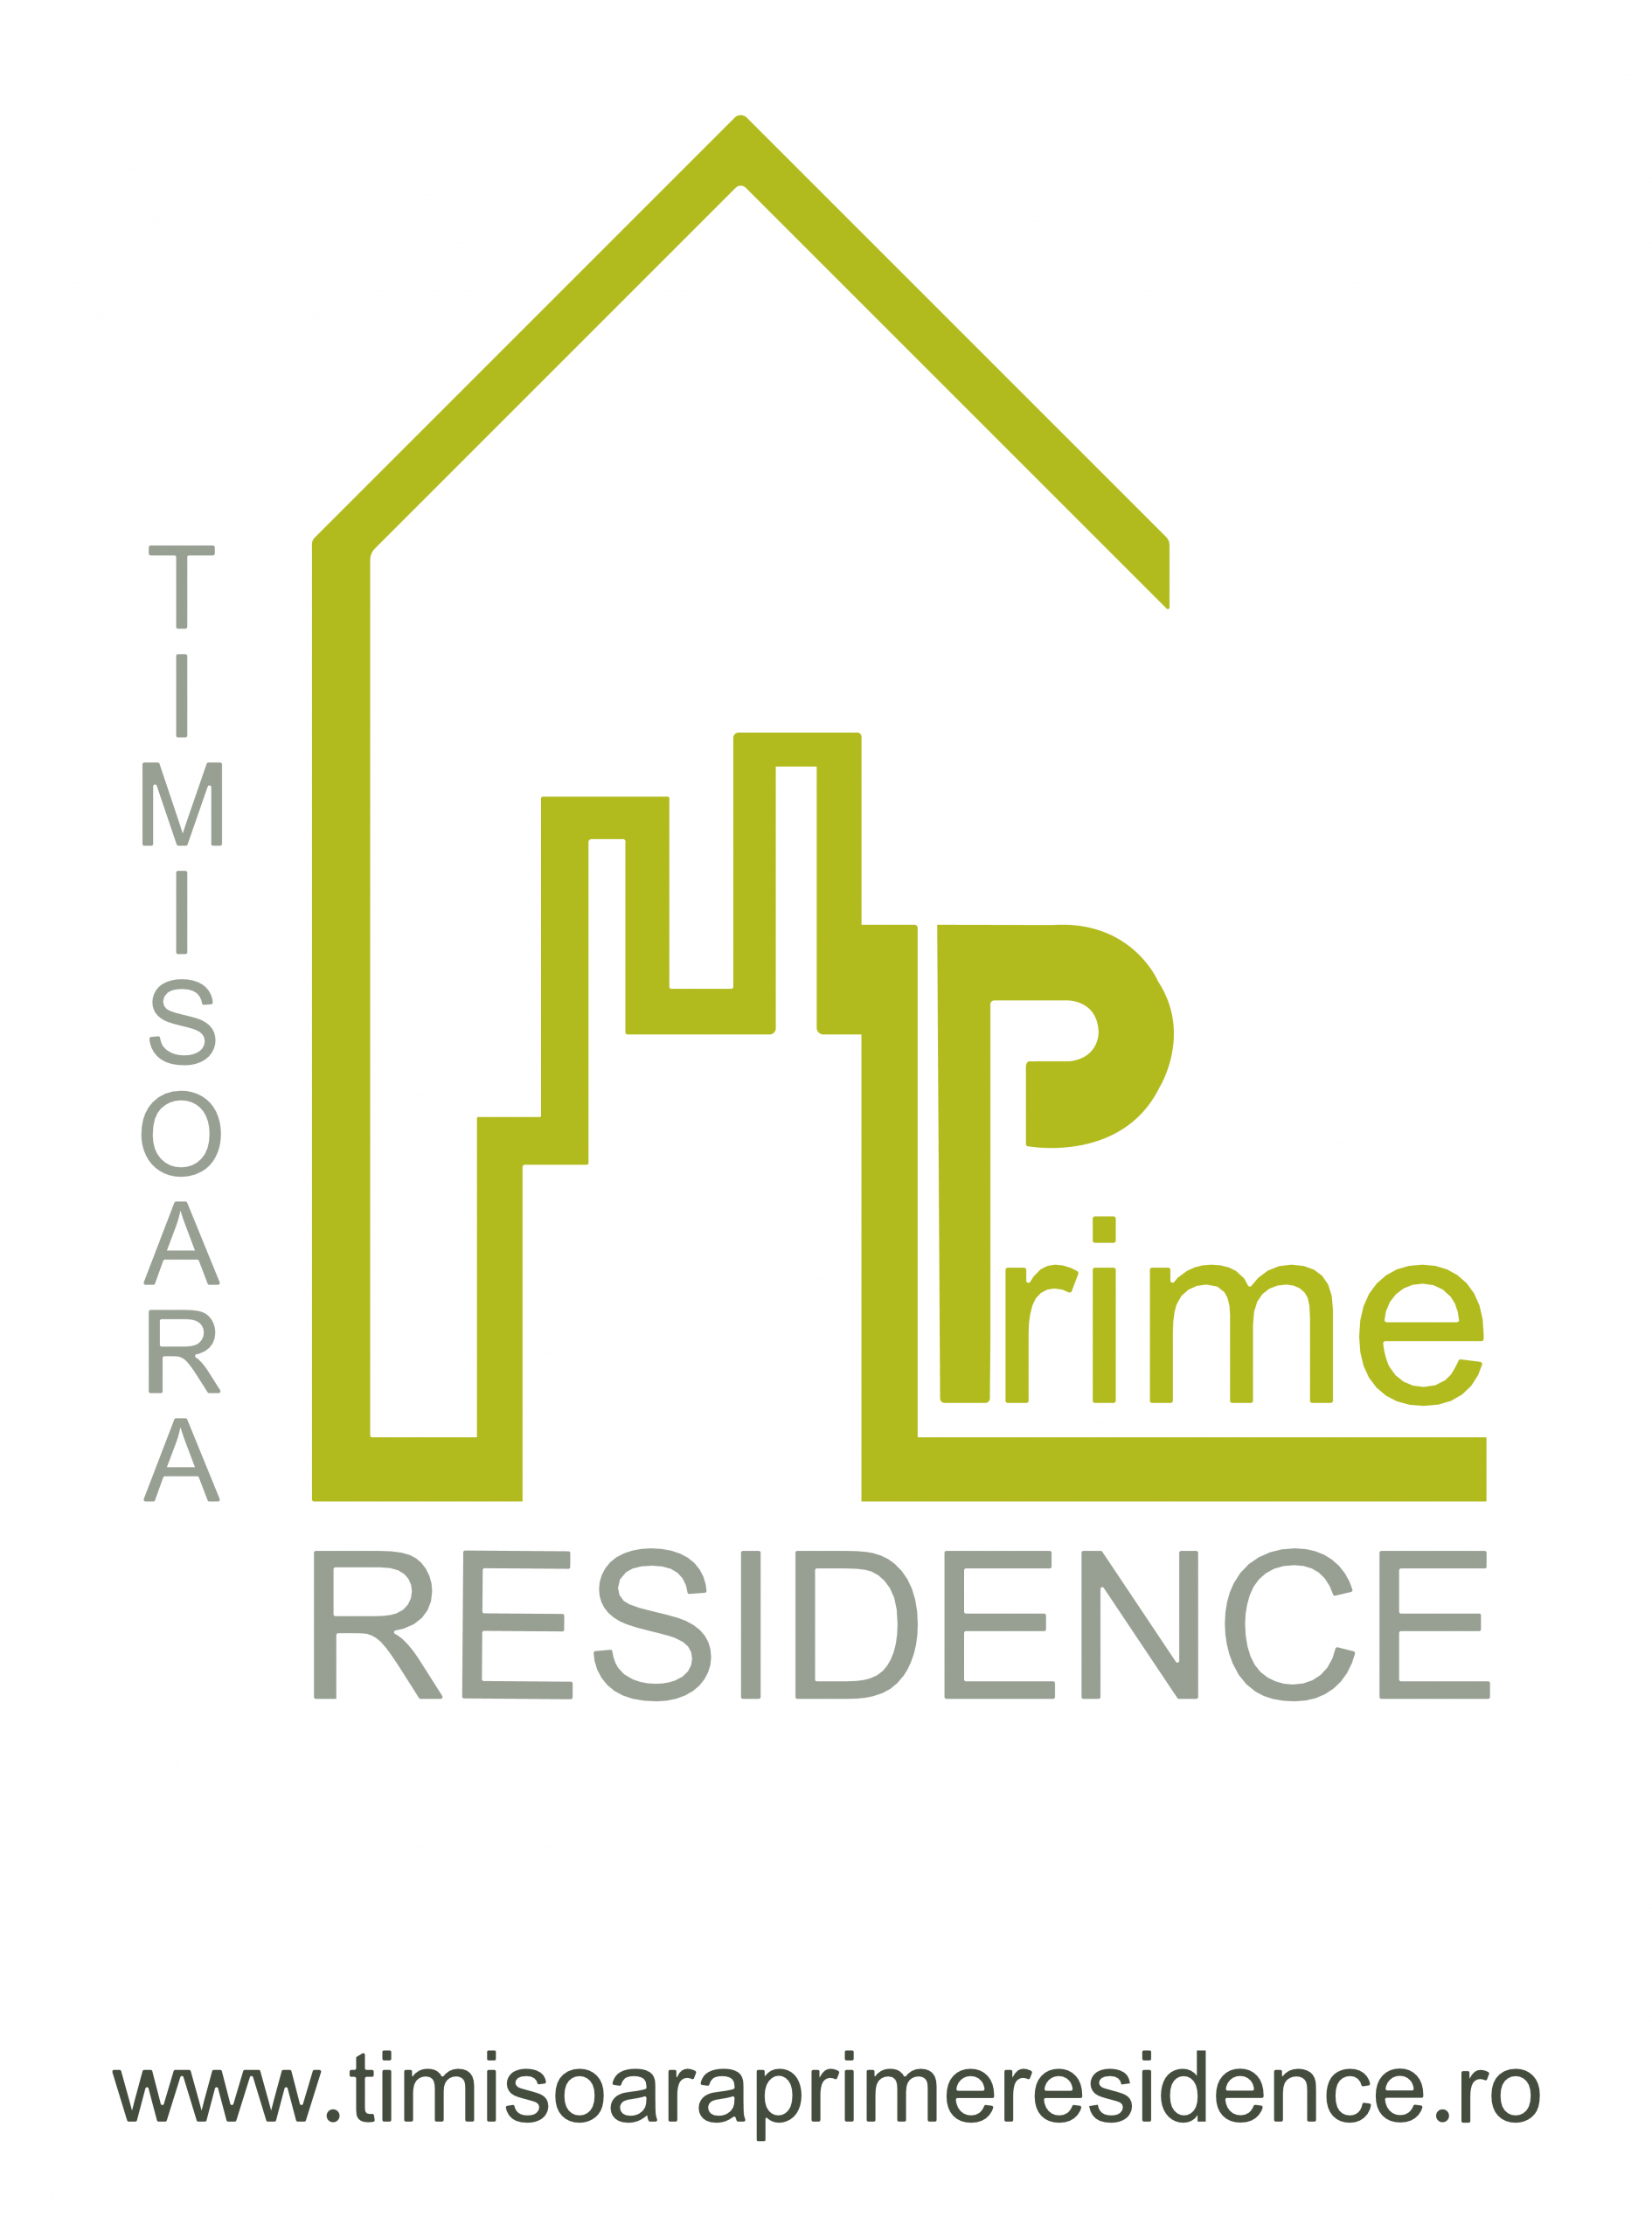 Timisoara Prime Residence